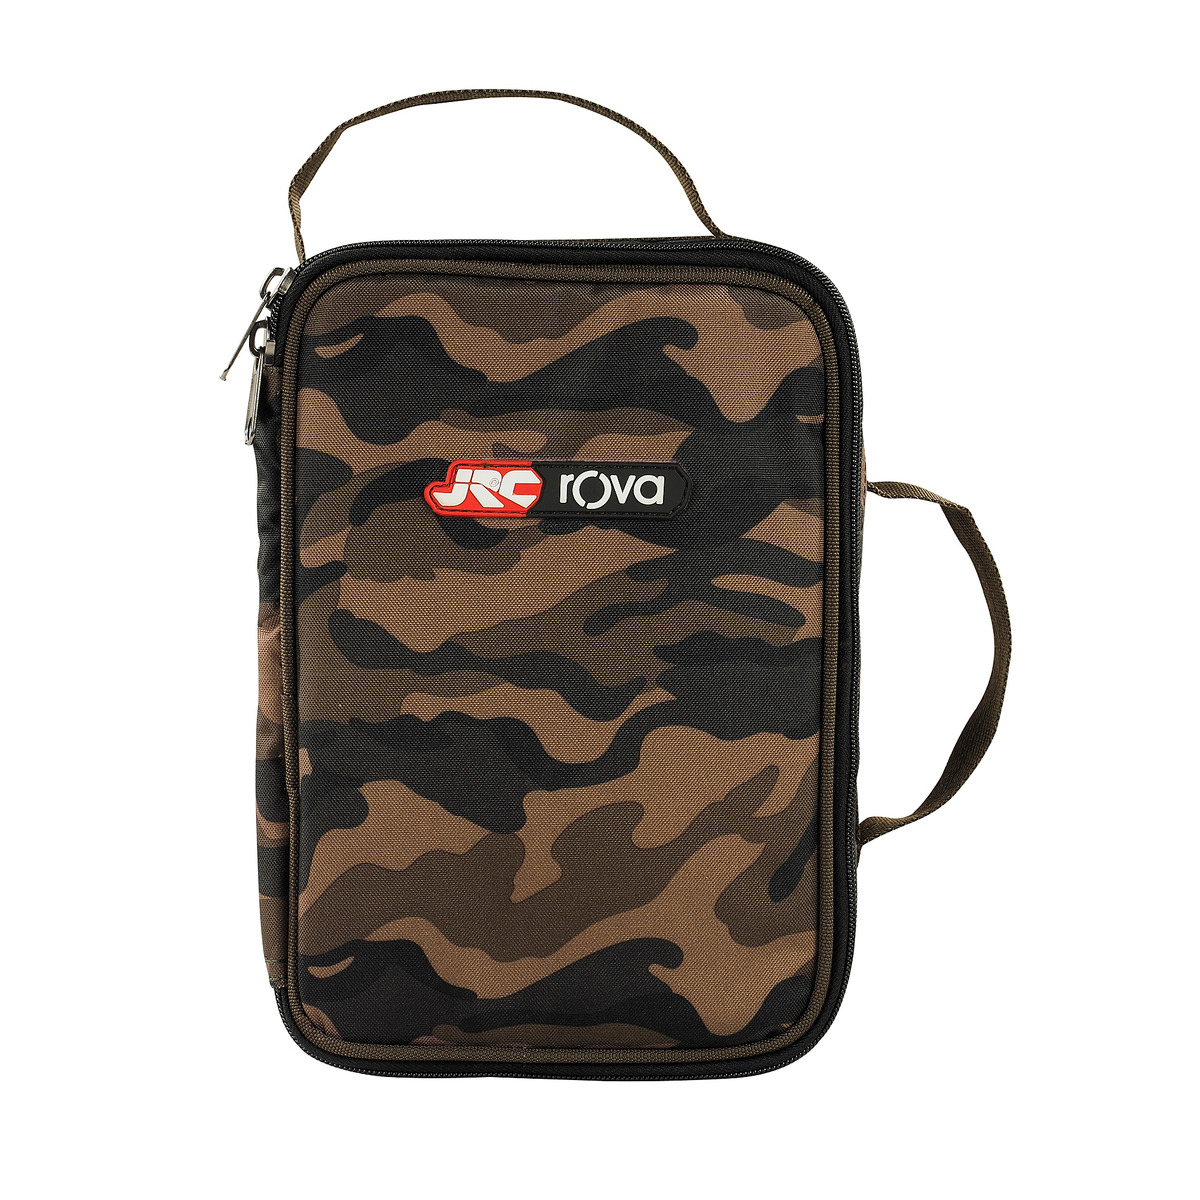 Jrc Rova  Accessory Bag Small - Large